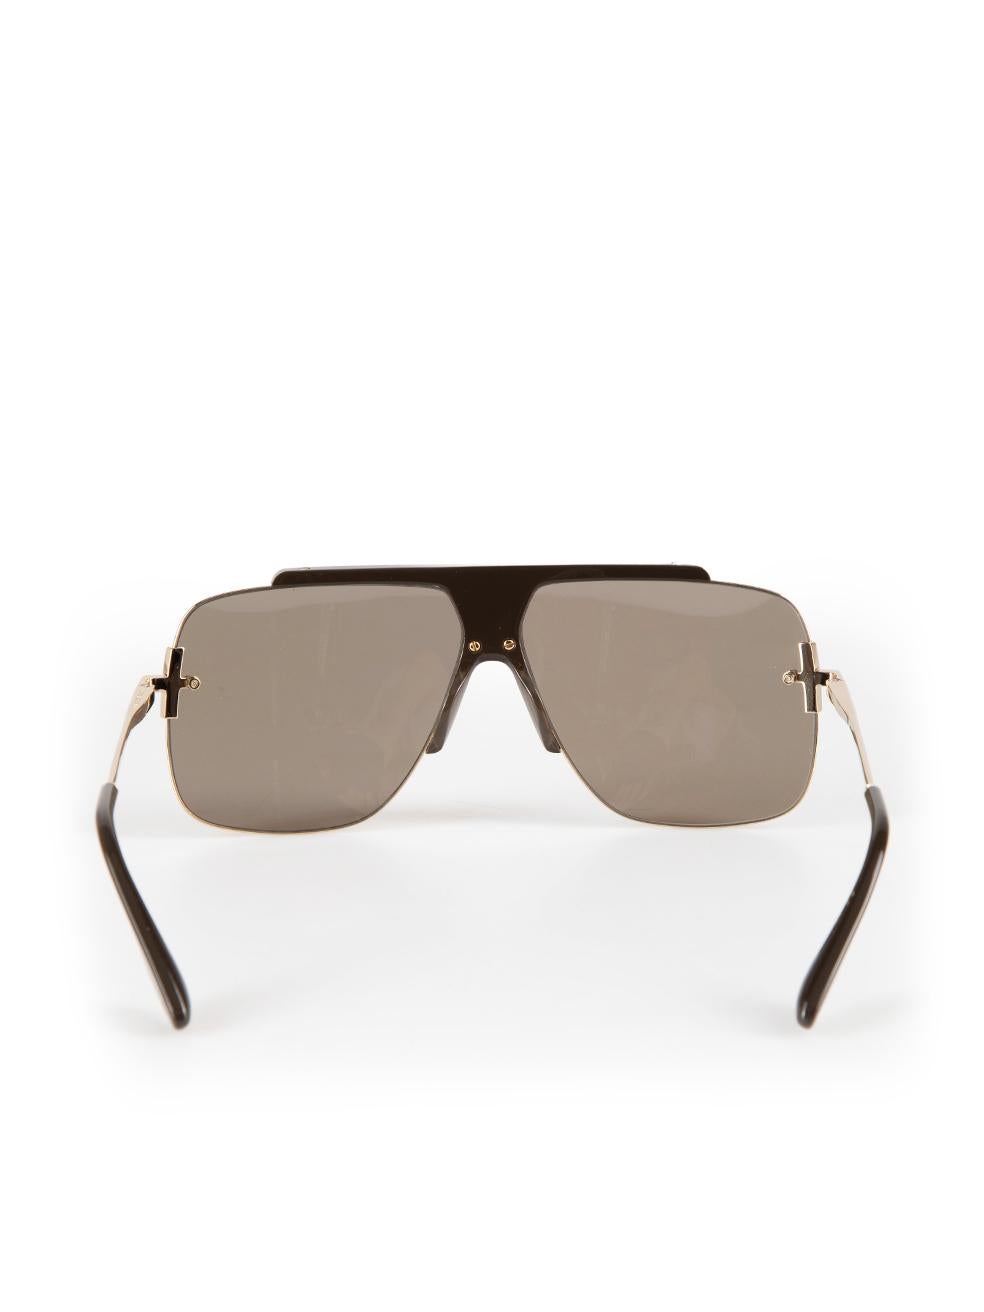 Women's Victoria Beckham Mocha Navigator Frame Sunglasses For Sale